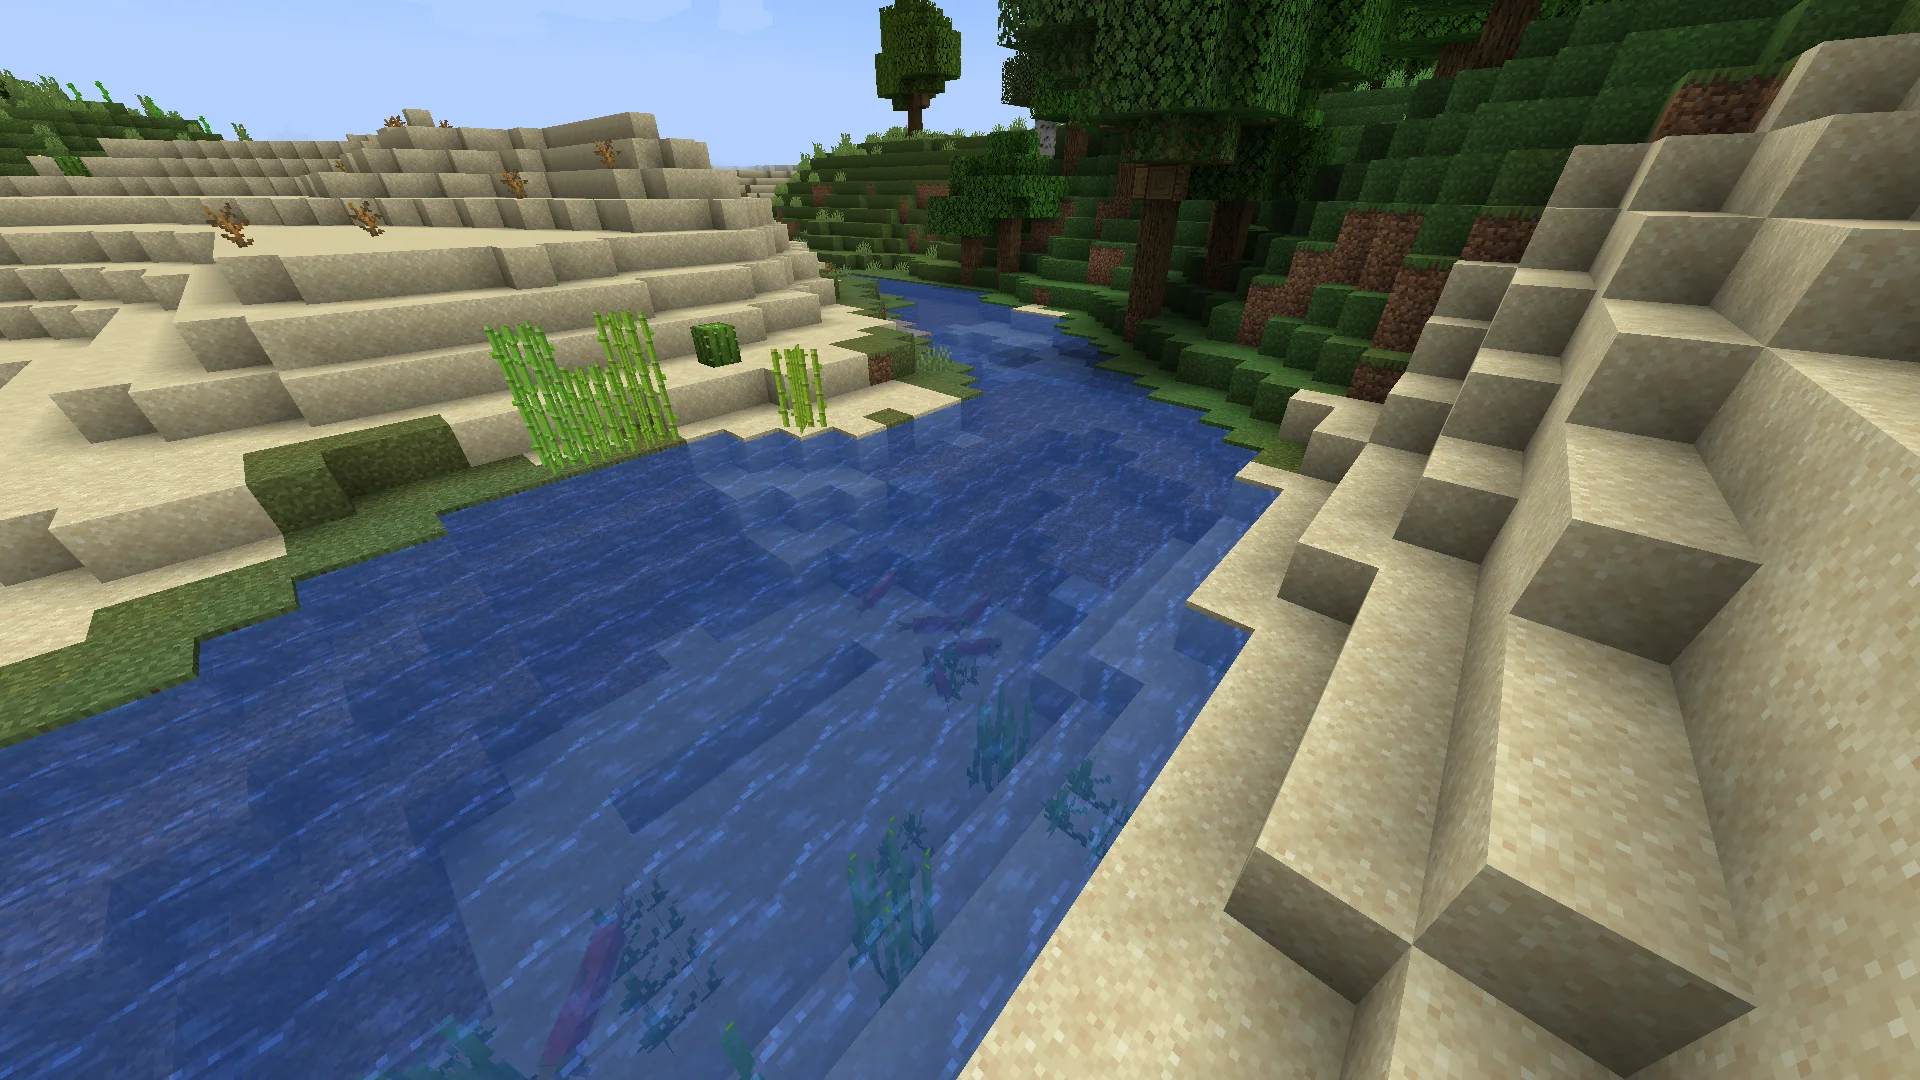 Vanilla Minecraft River near a desert biome